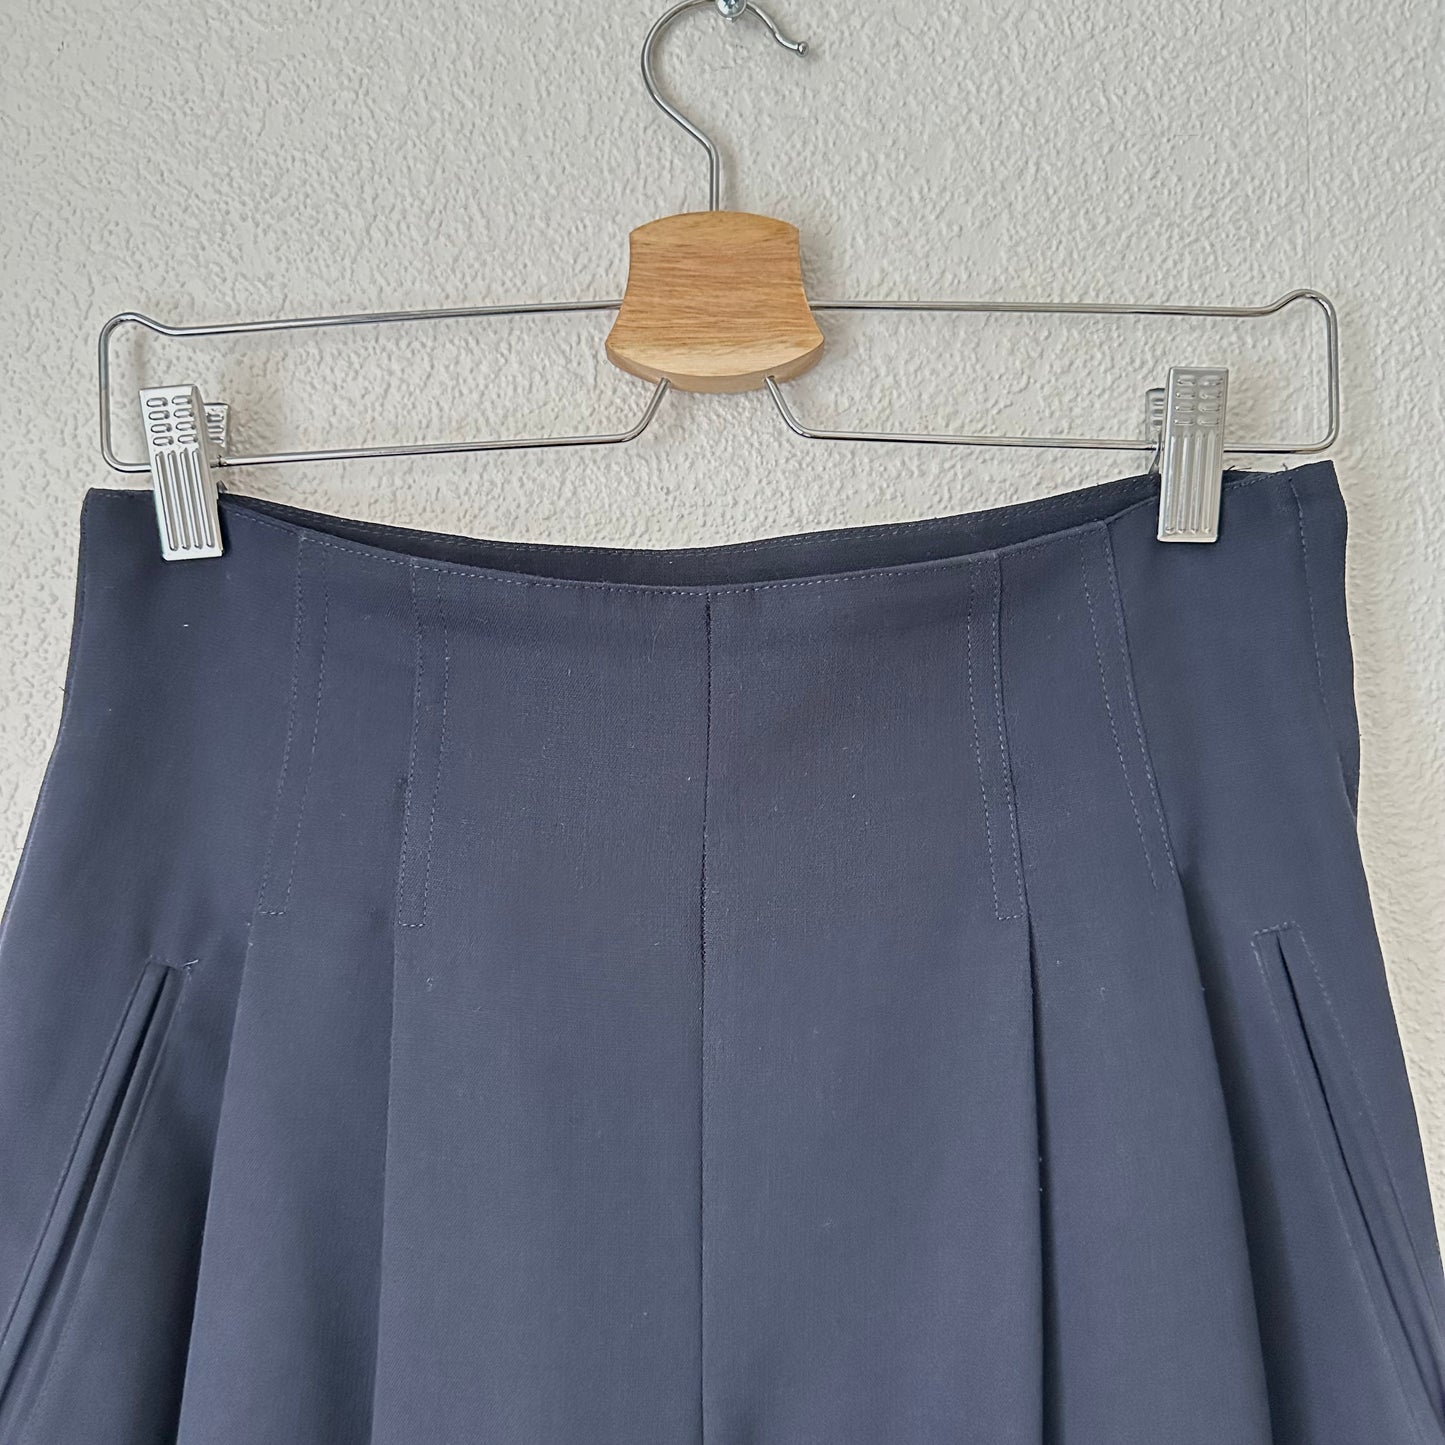 Vintage Navy Blue Wool Pants - Mondi, size S